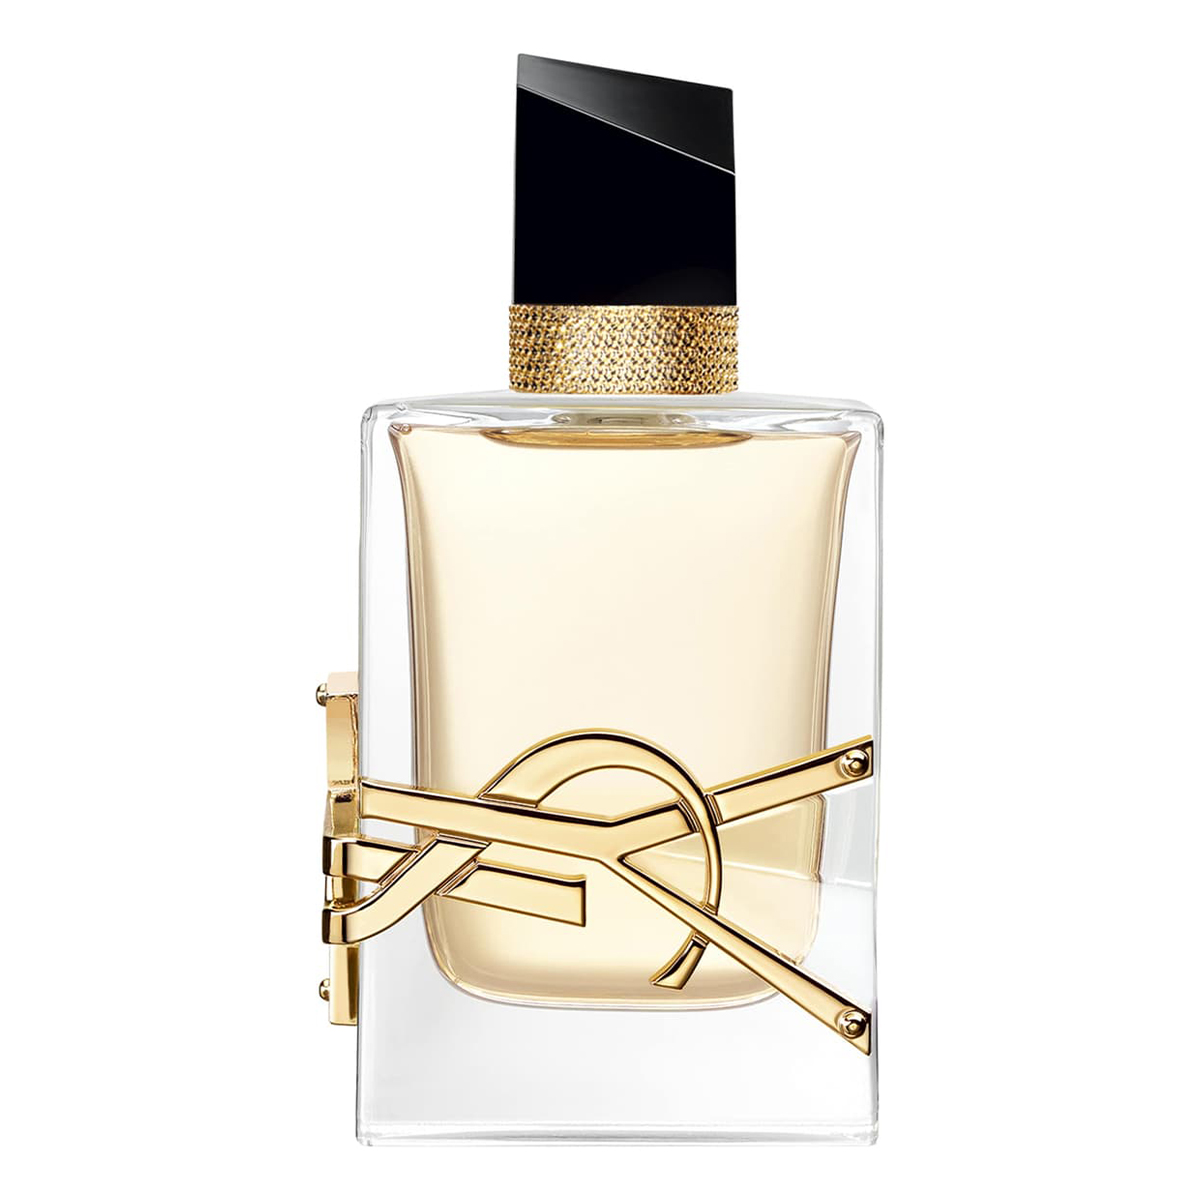 the best vanilla scented perfume